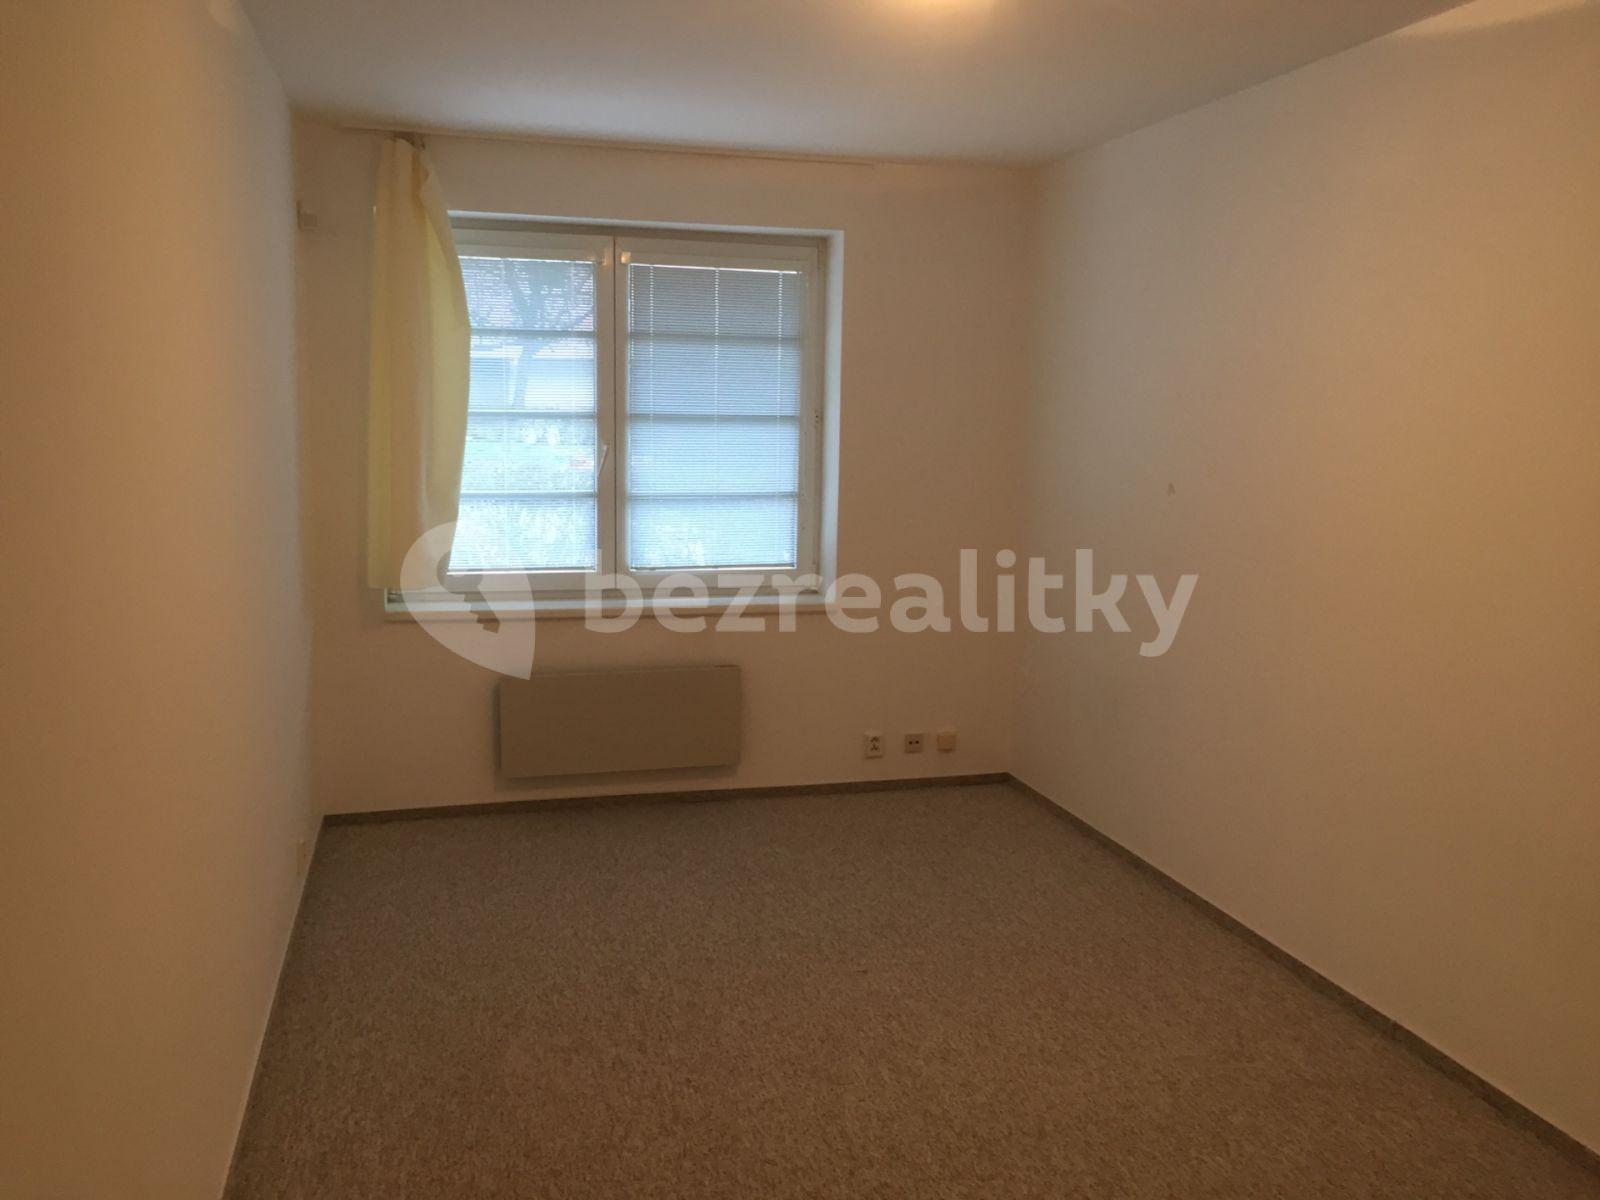 2 bedroom with open-plan kitchen flat to rent, 128 m², Bublíkova, Prague, Prague